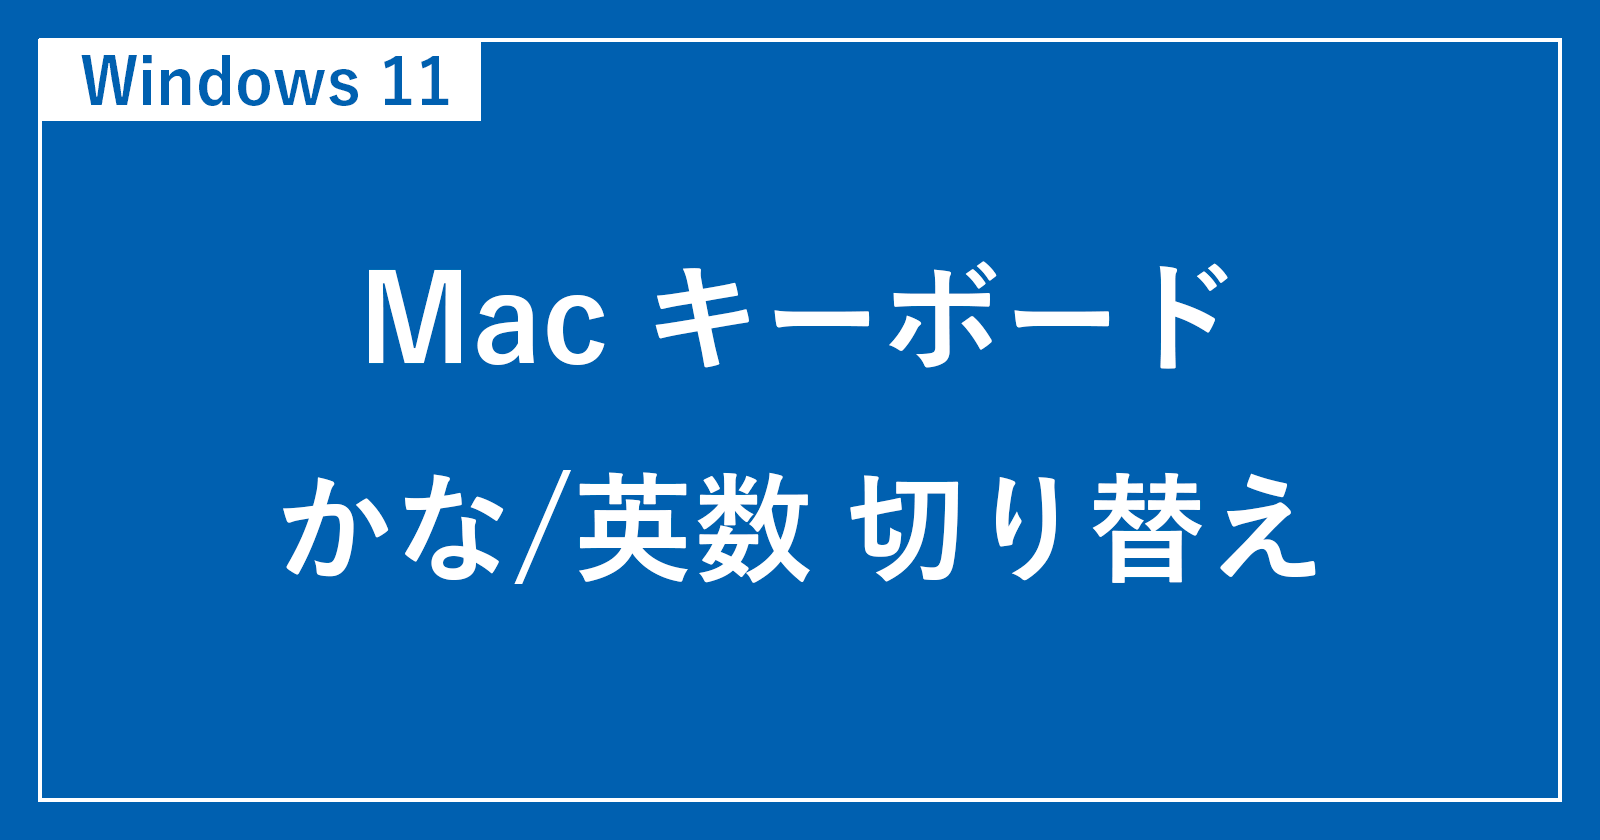 windows 11 mac keyboard